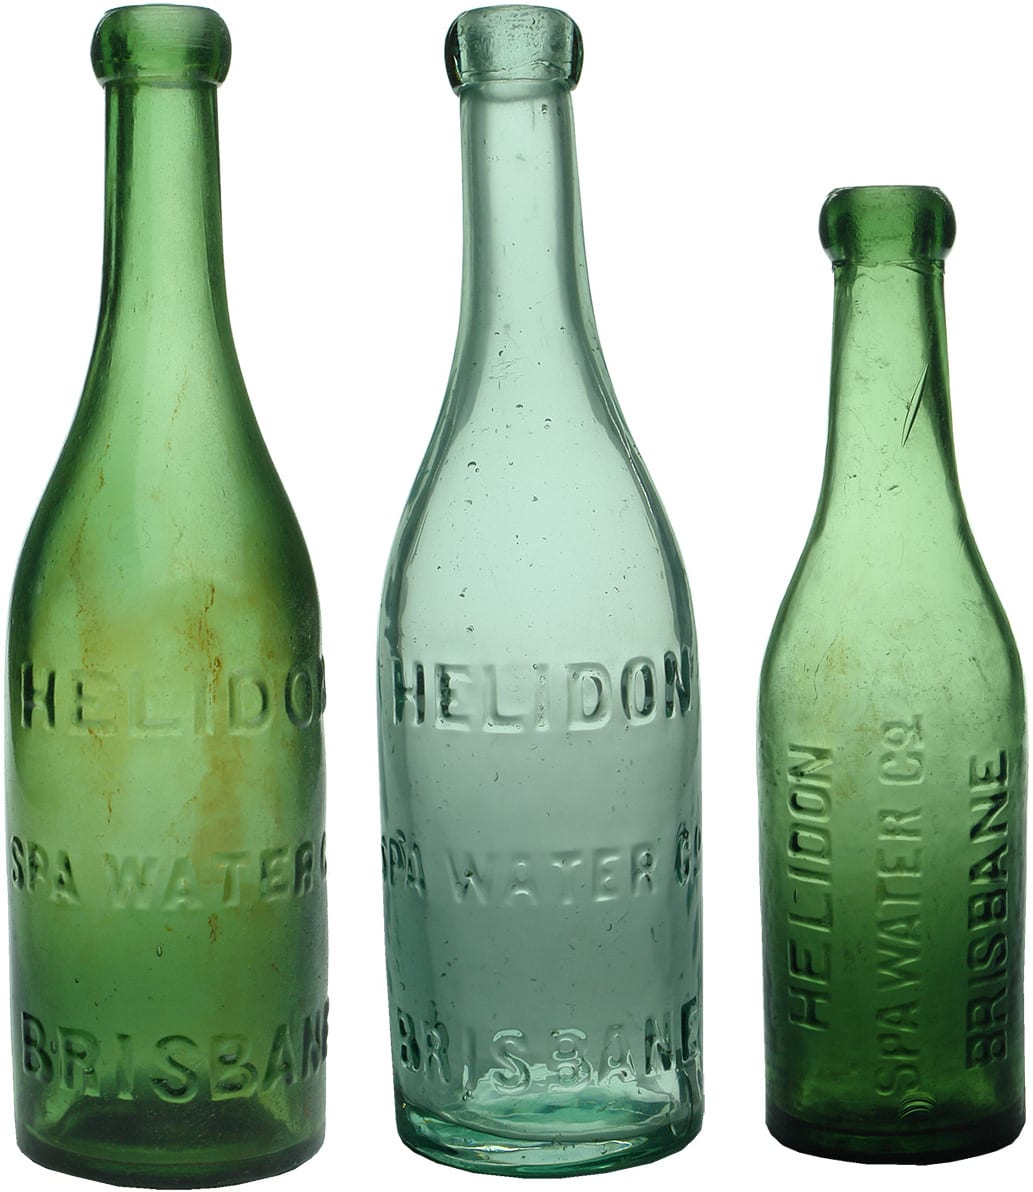 Helidon Spa Water Brisbane Blob Top Bottles